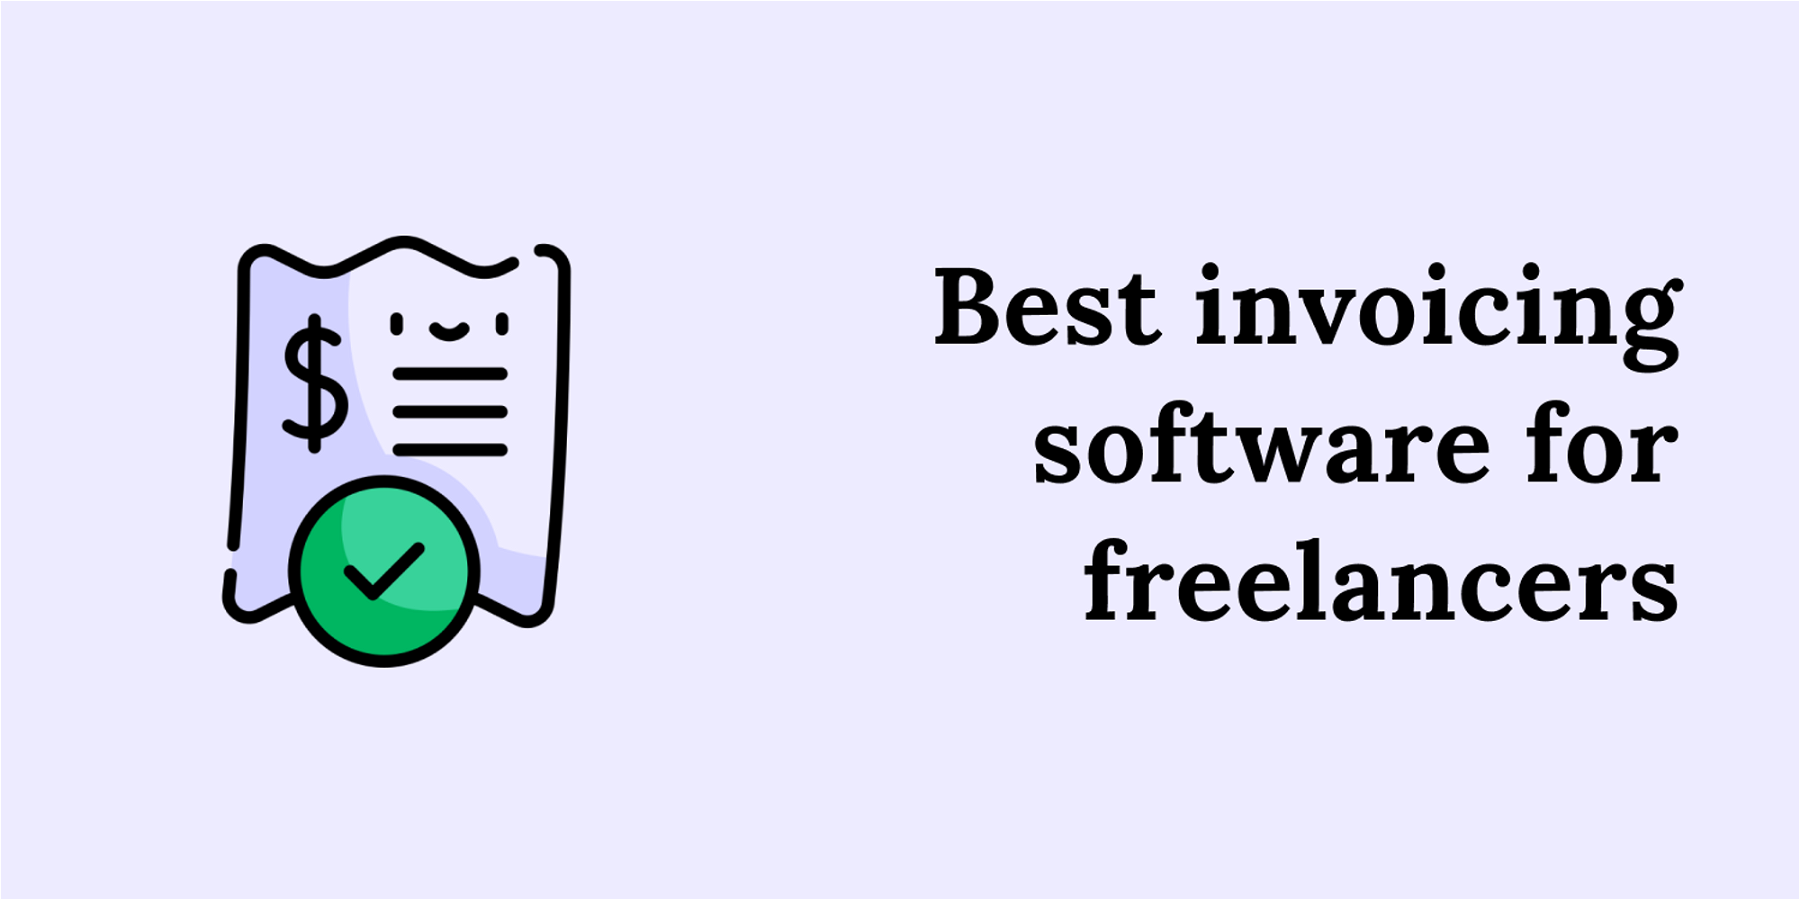 Best invoicing software for freelancers